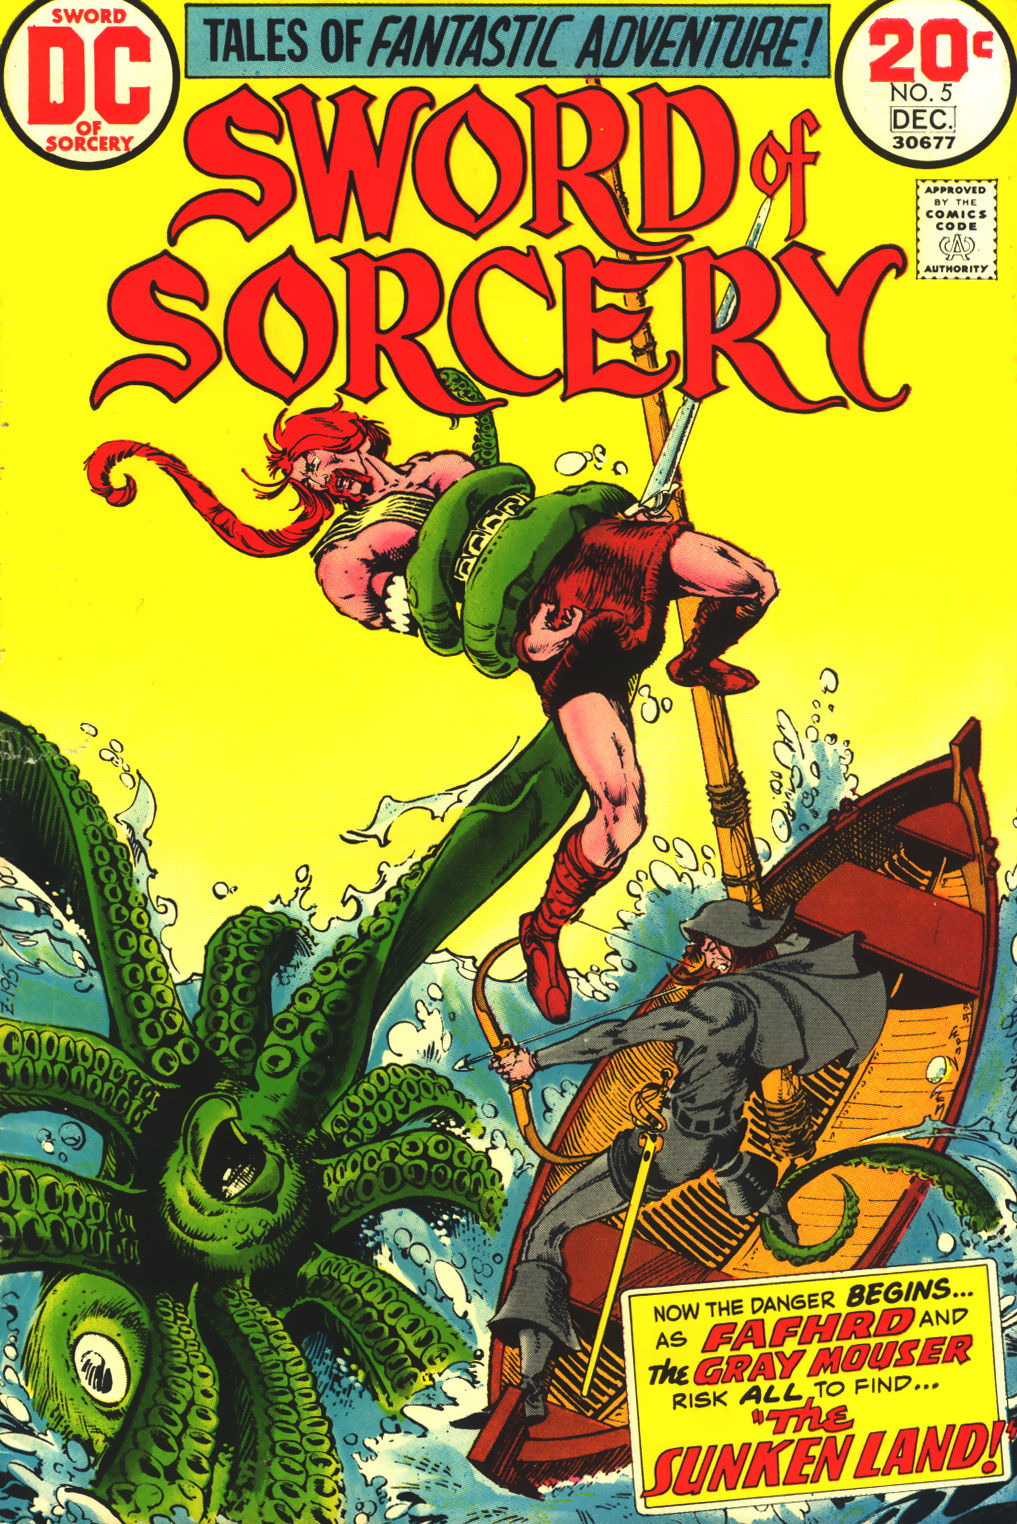 Sword-of_Sorcery5-Walter Simonson